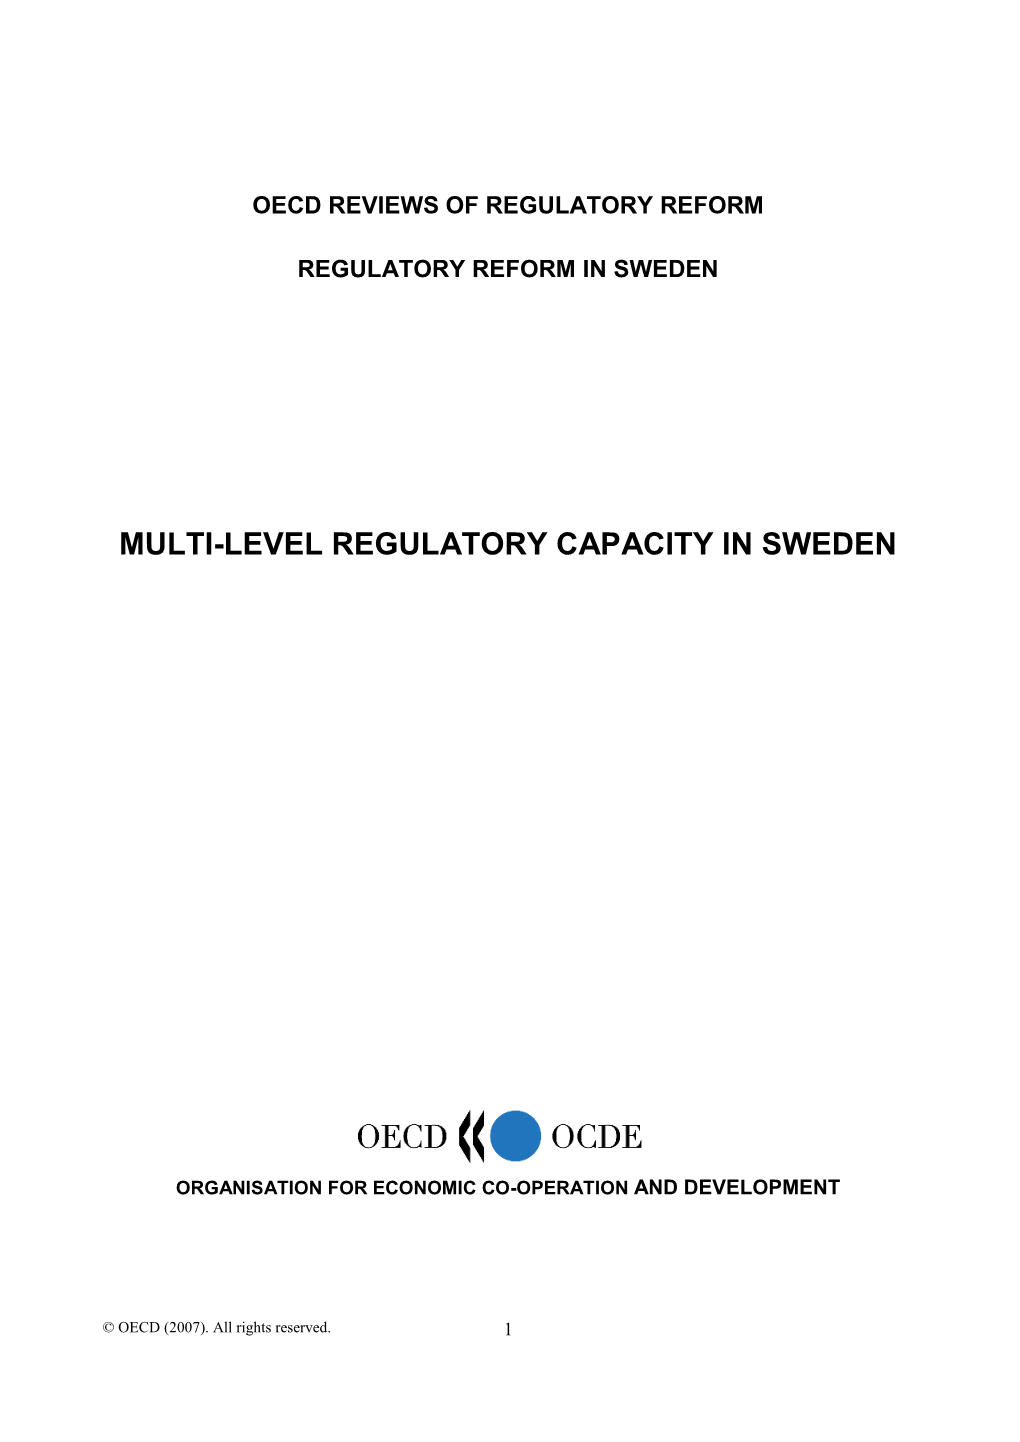 Multi-Level Regulatory Capacity in Sweden